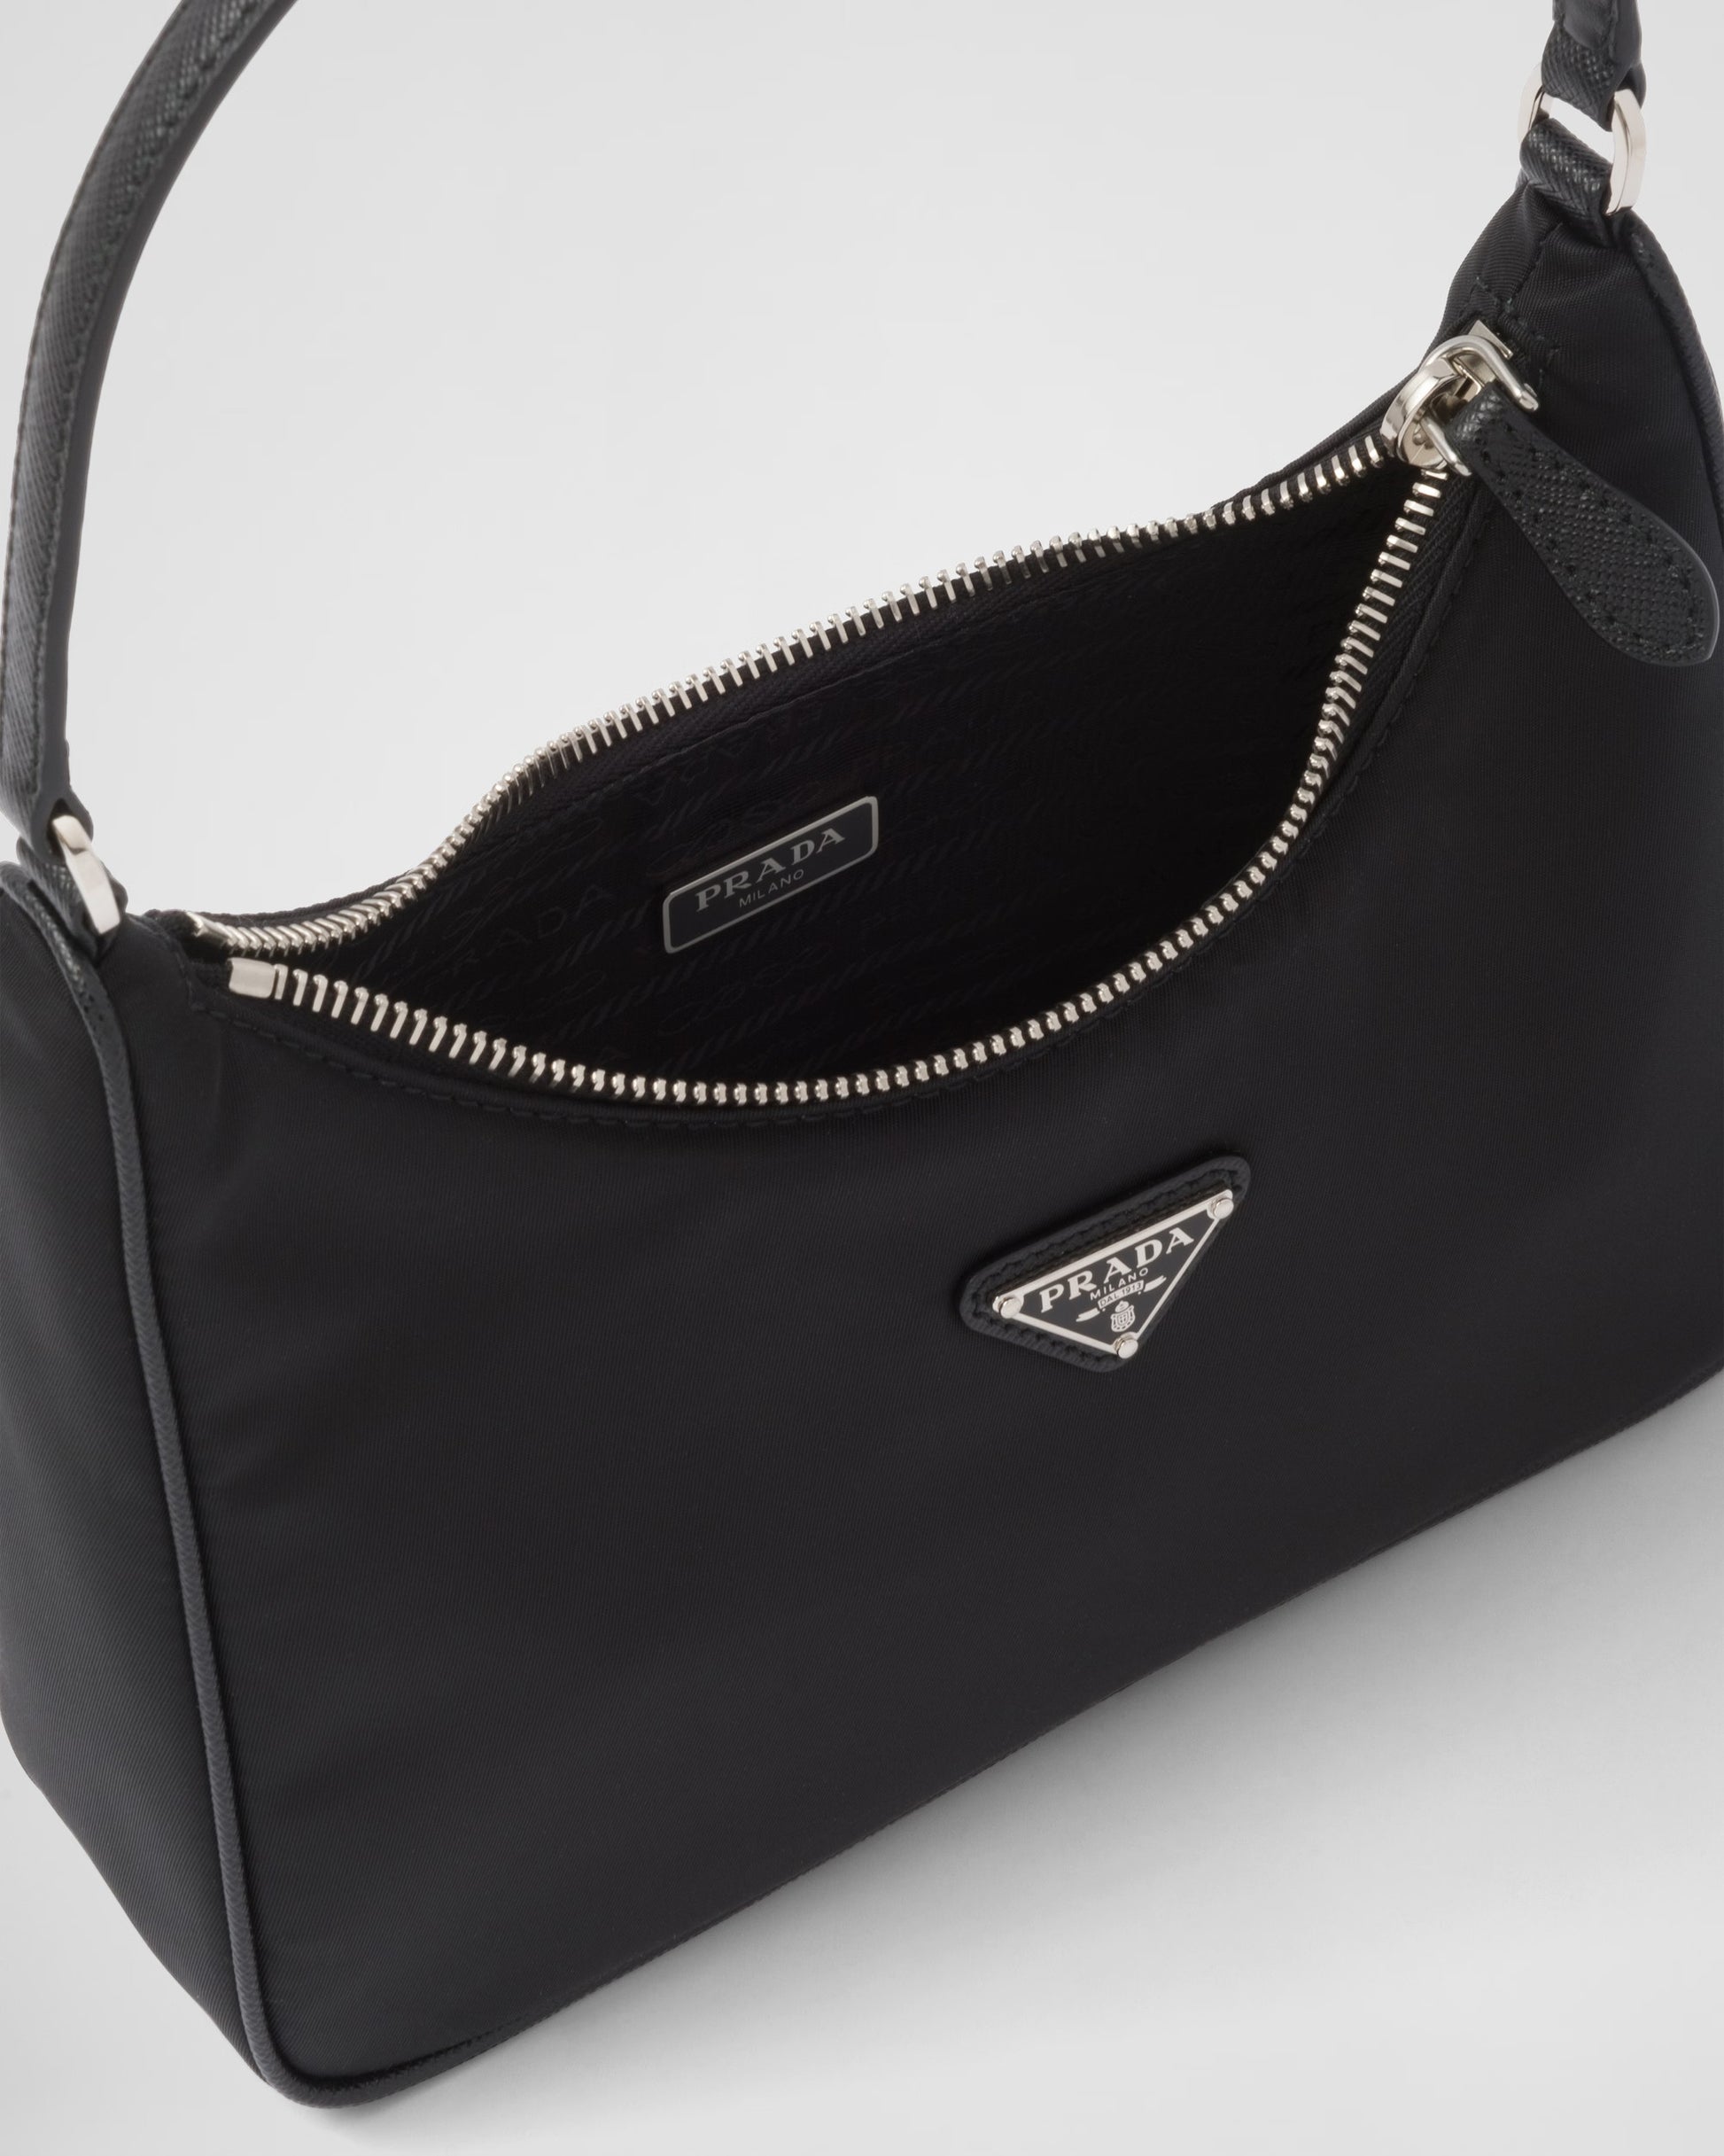 Black Prada Re-edition 2005 Re-nylon Bag